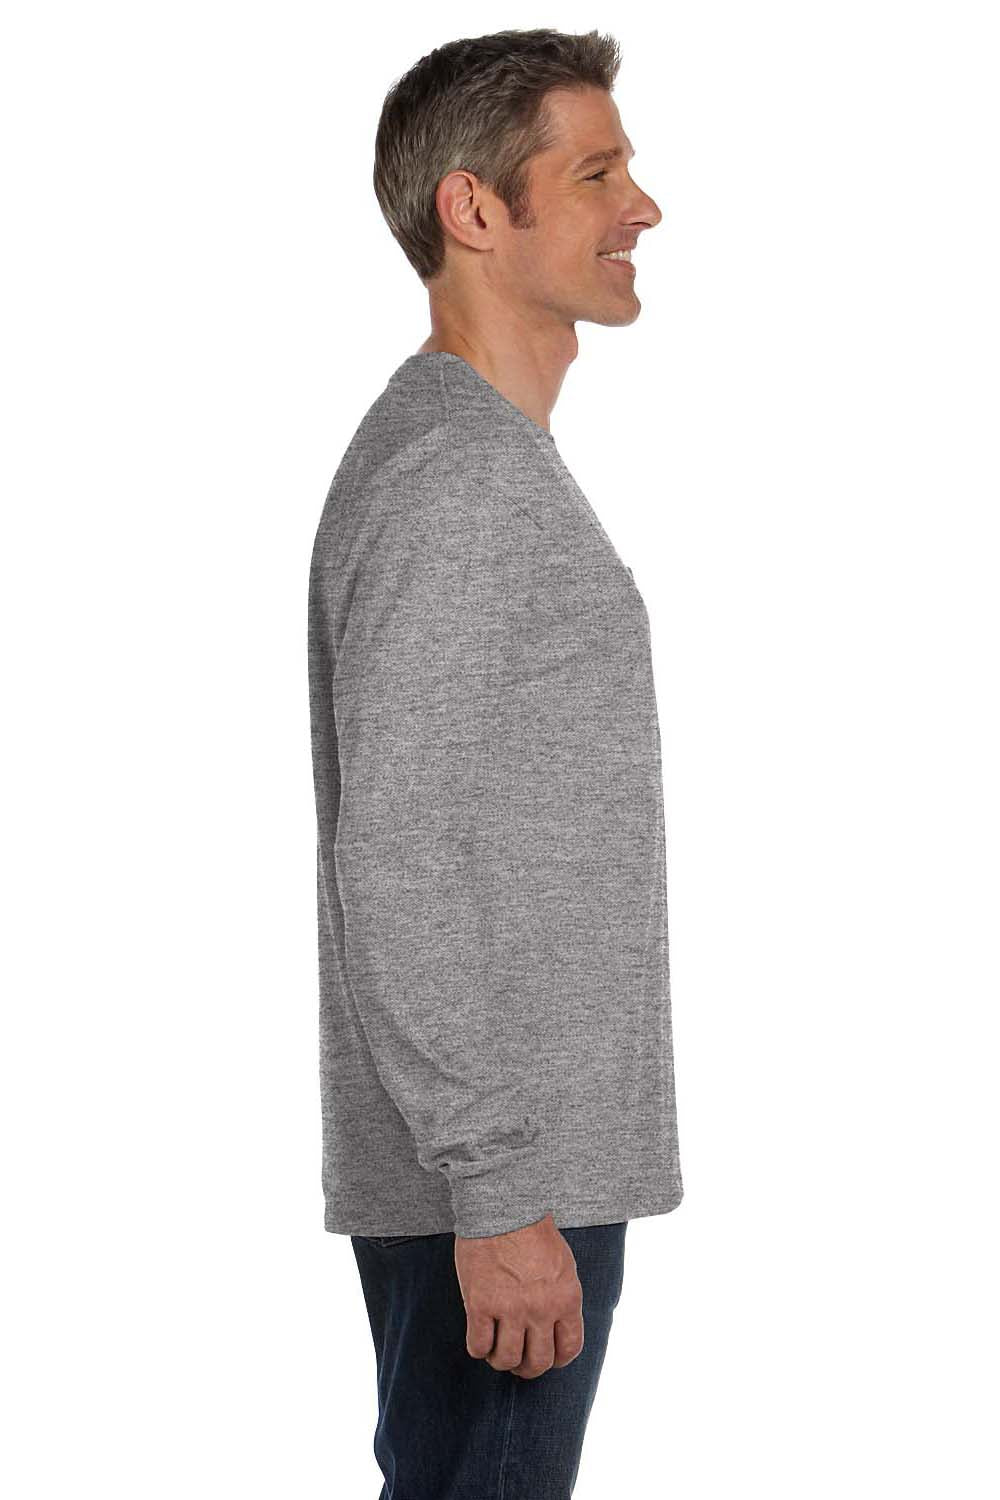 Hanes 5596 Mens ComfortSoft Long Sleeve Crewneck T-Shirt w/ Pocket Light Steel Grey Side